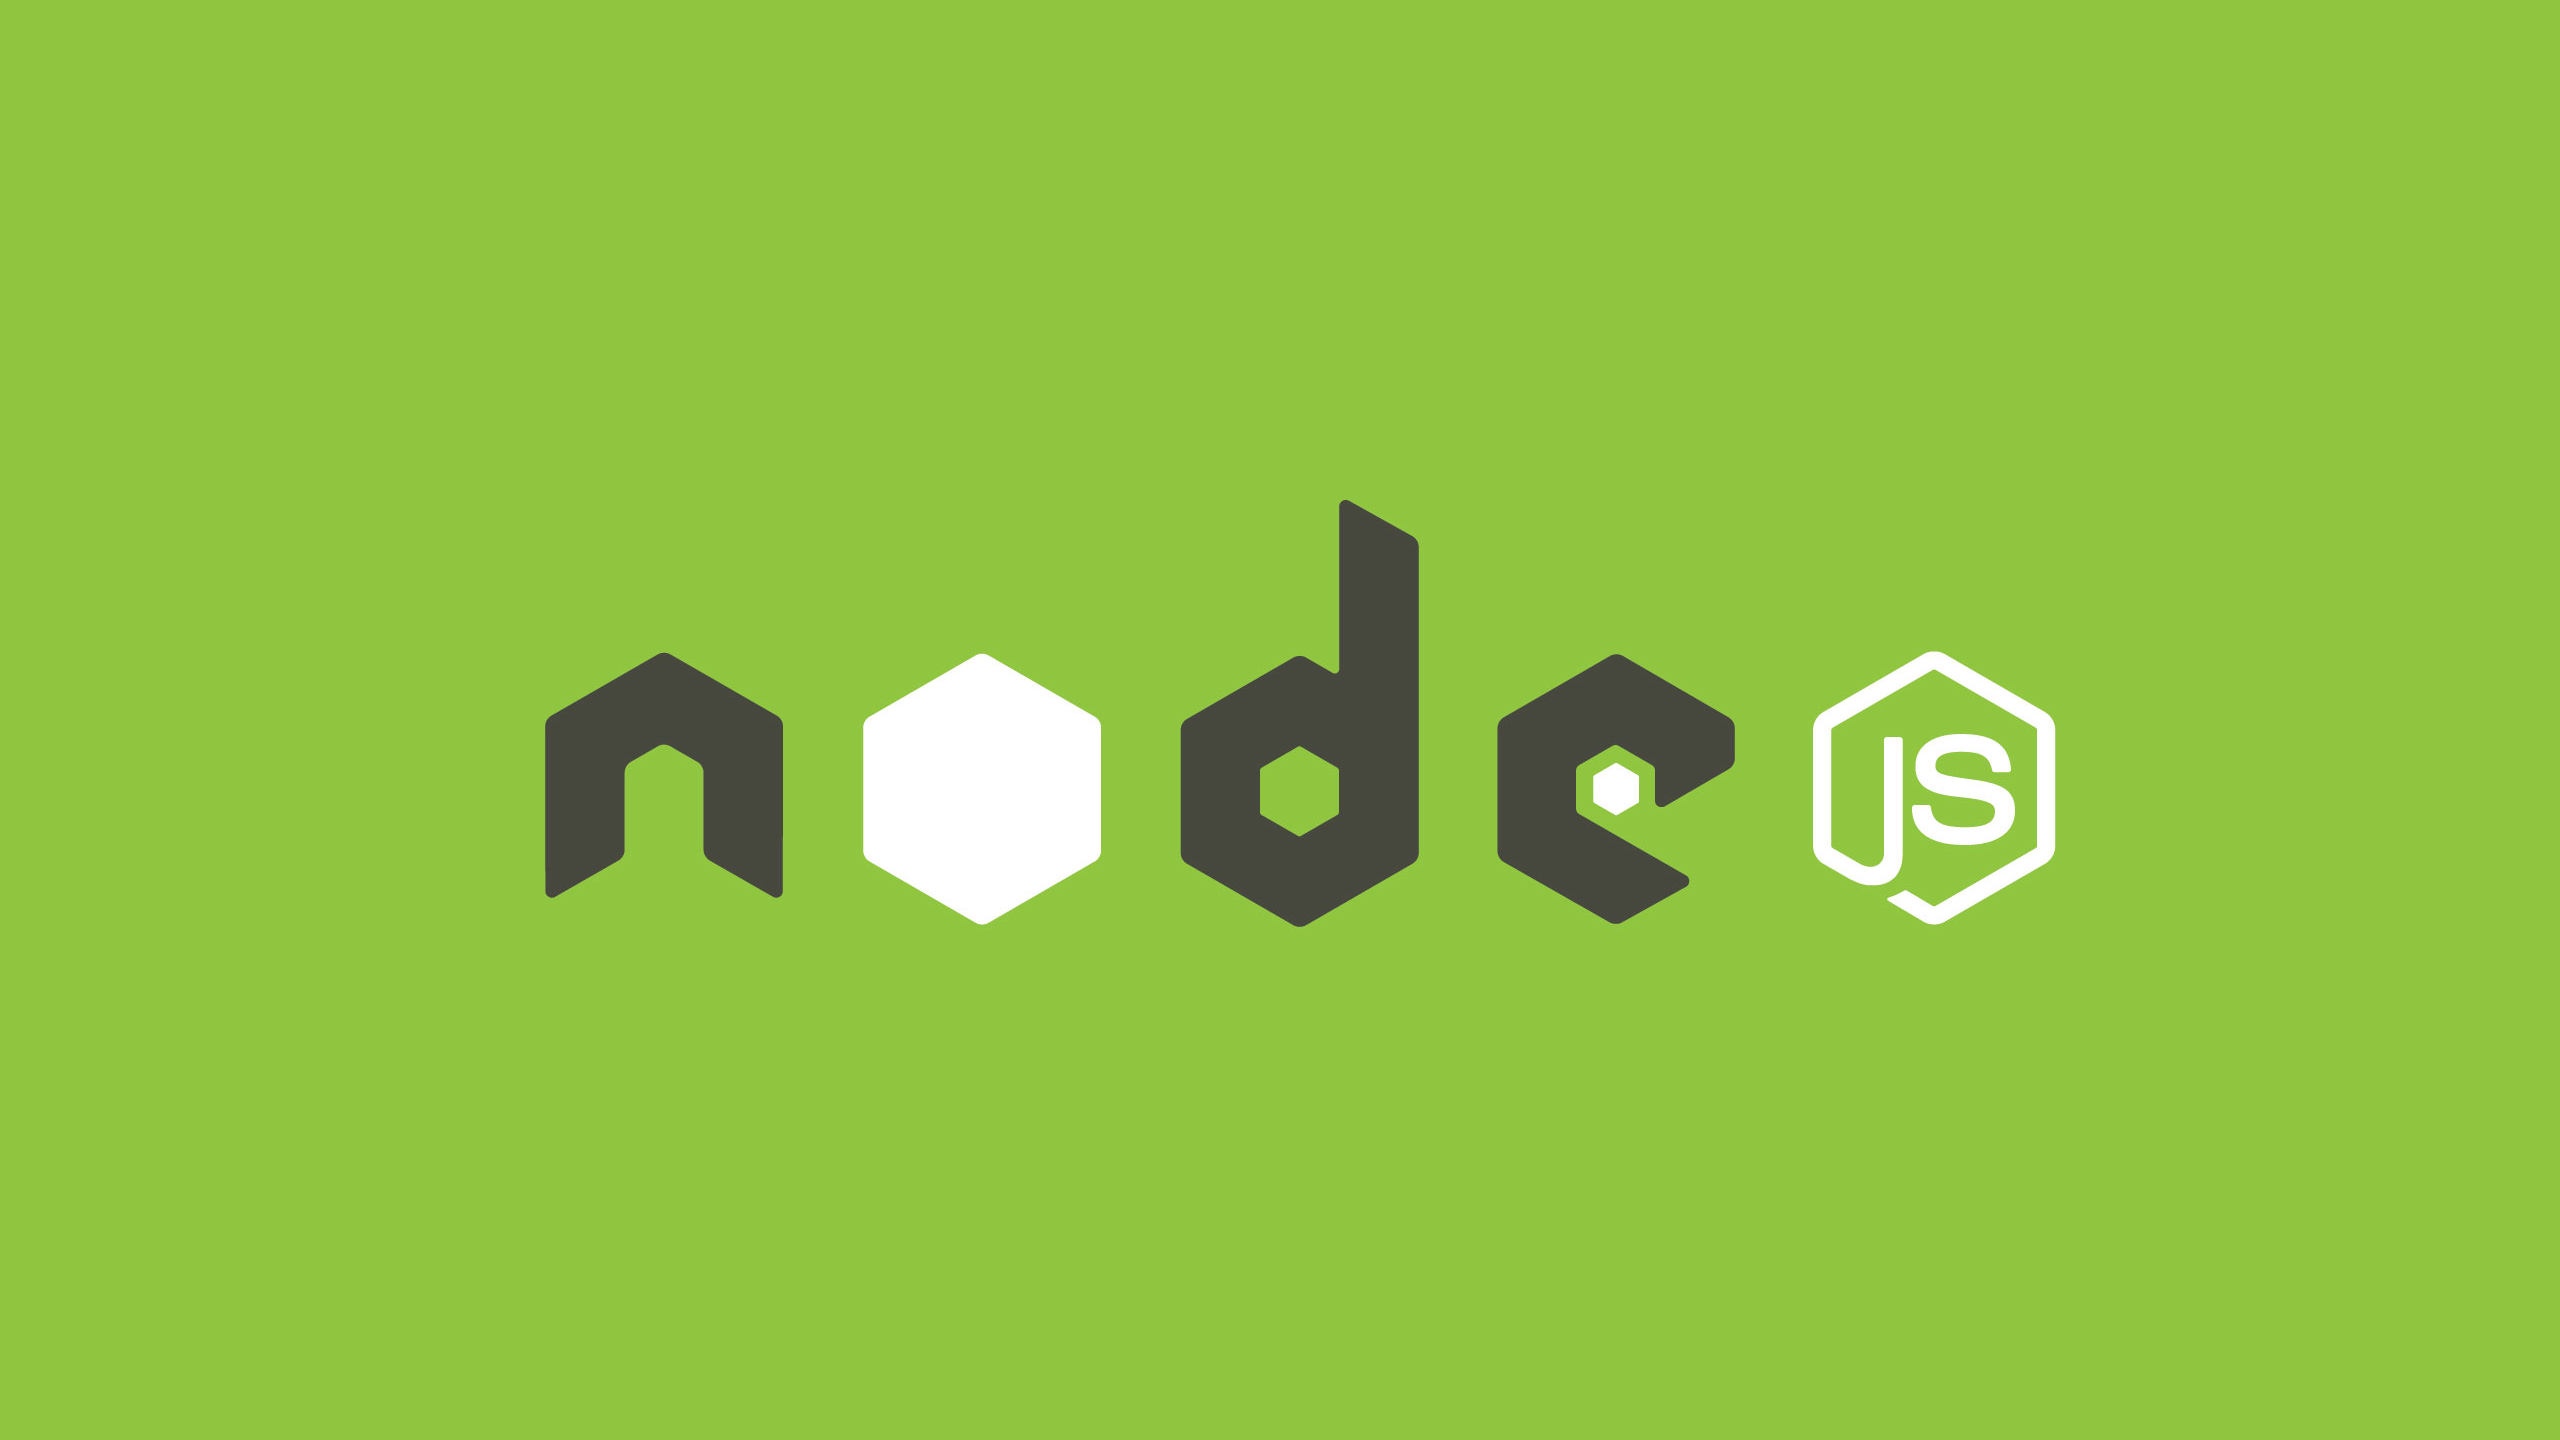 Node Js JavaScript Minimalism Green Background 2560x1440